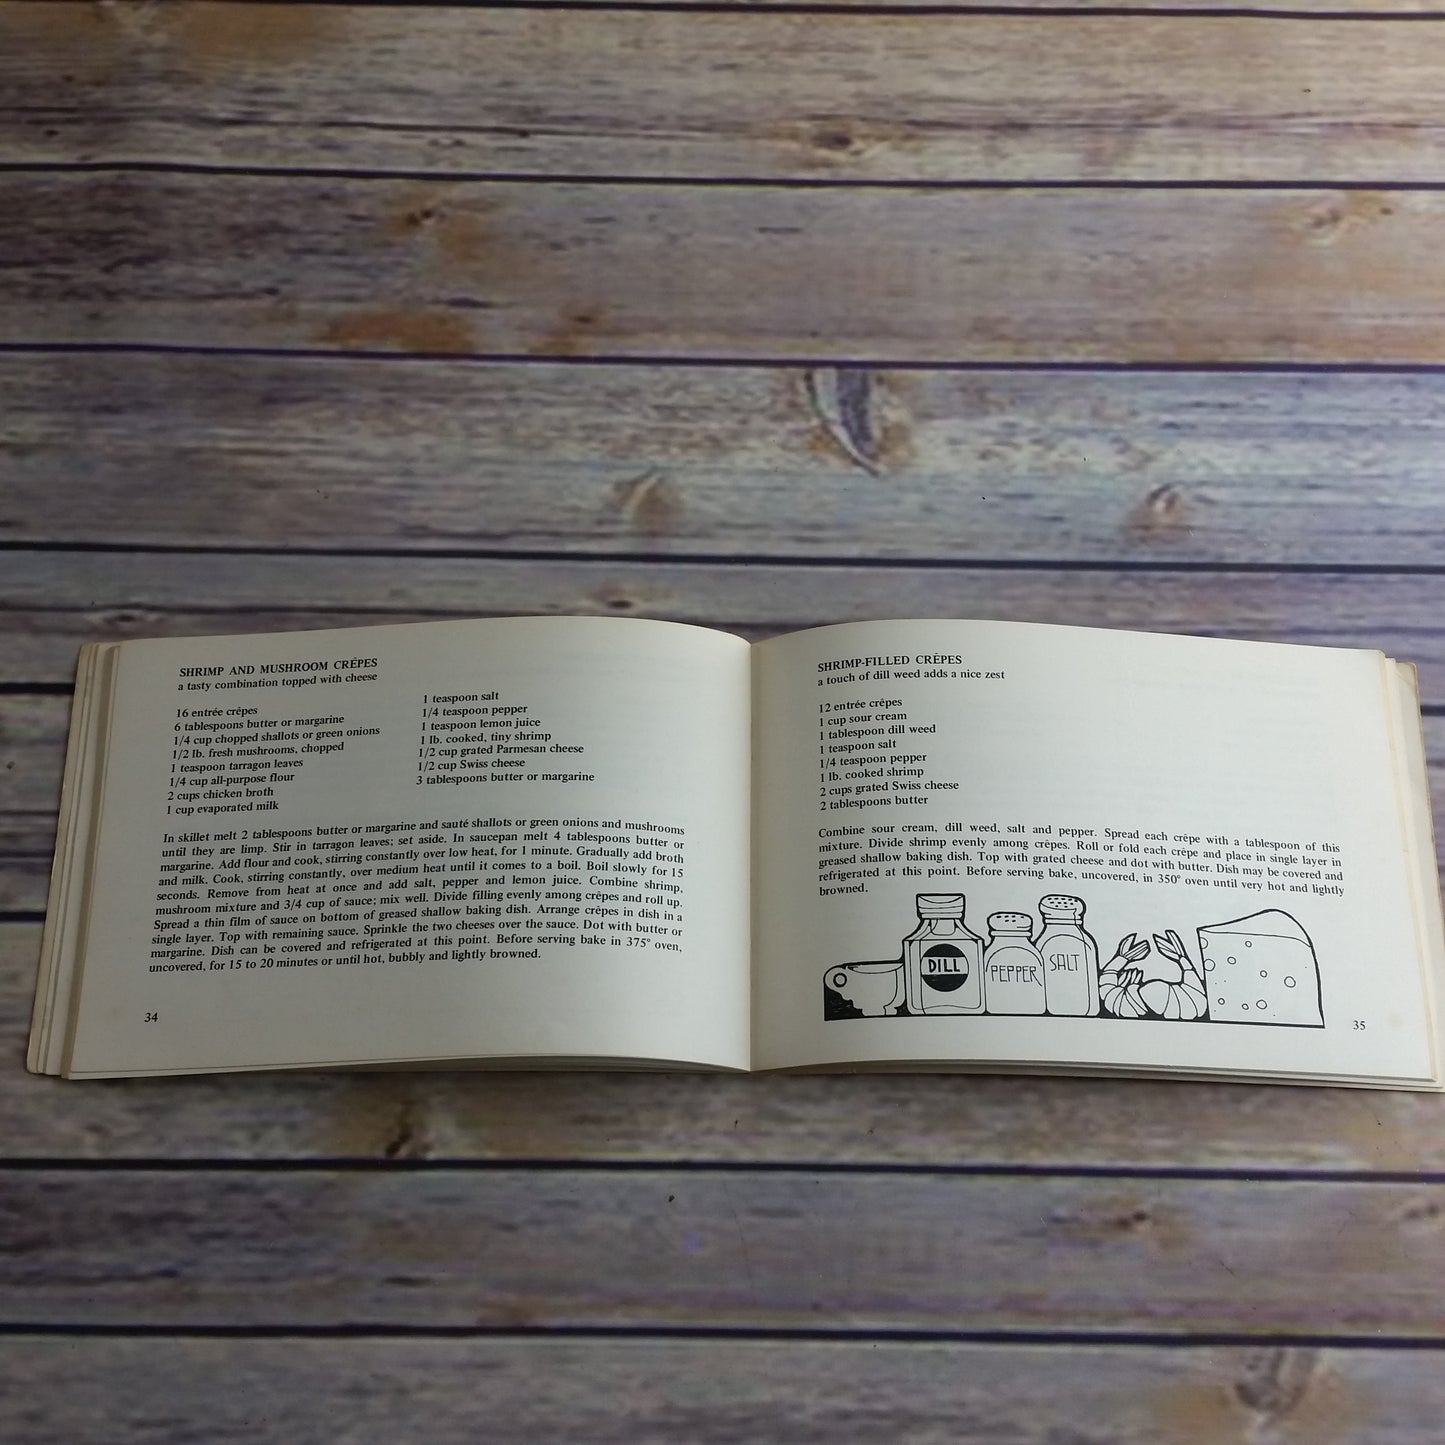 Vintage Cookbook The Crepe Book Susan Herbert Owlswood Productions 1975 Paperback Booklet